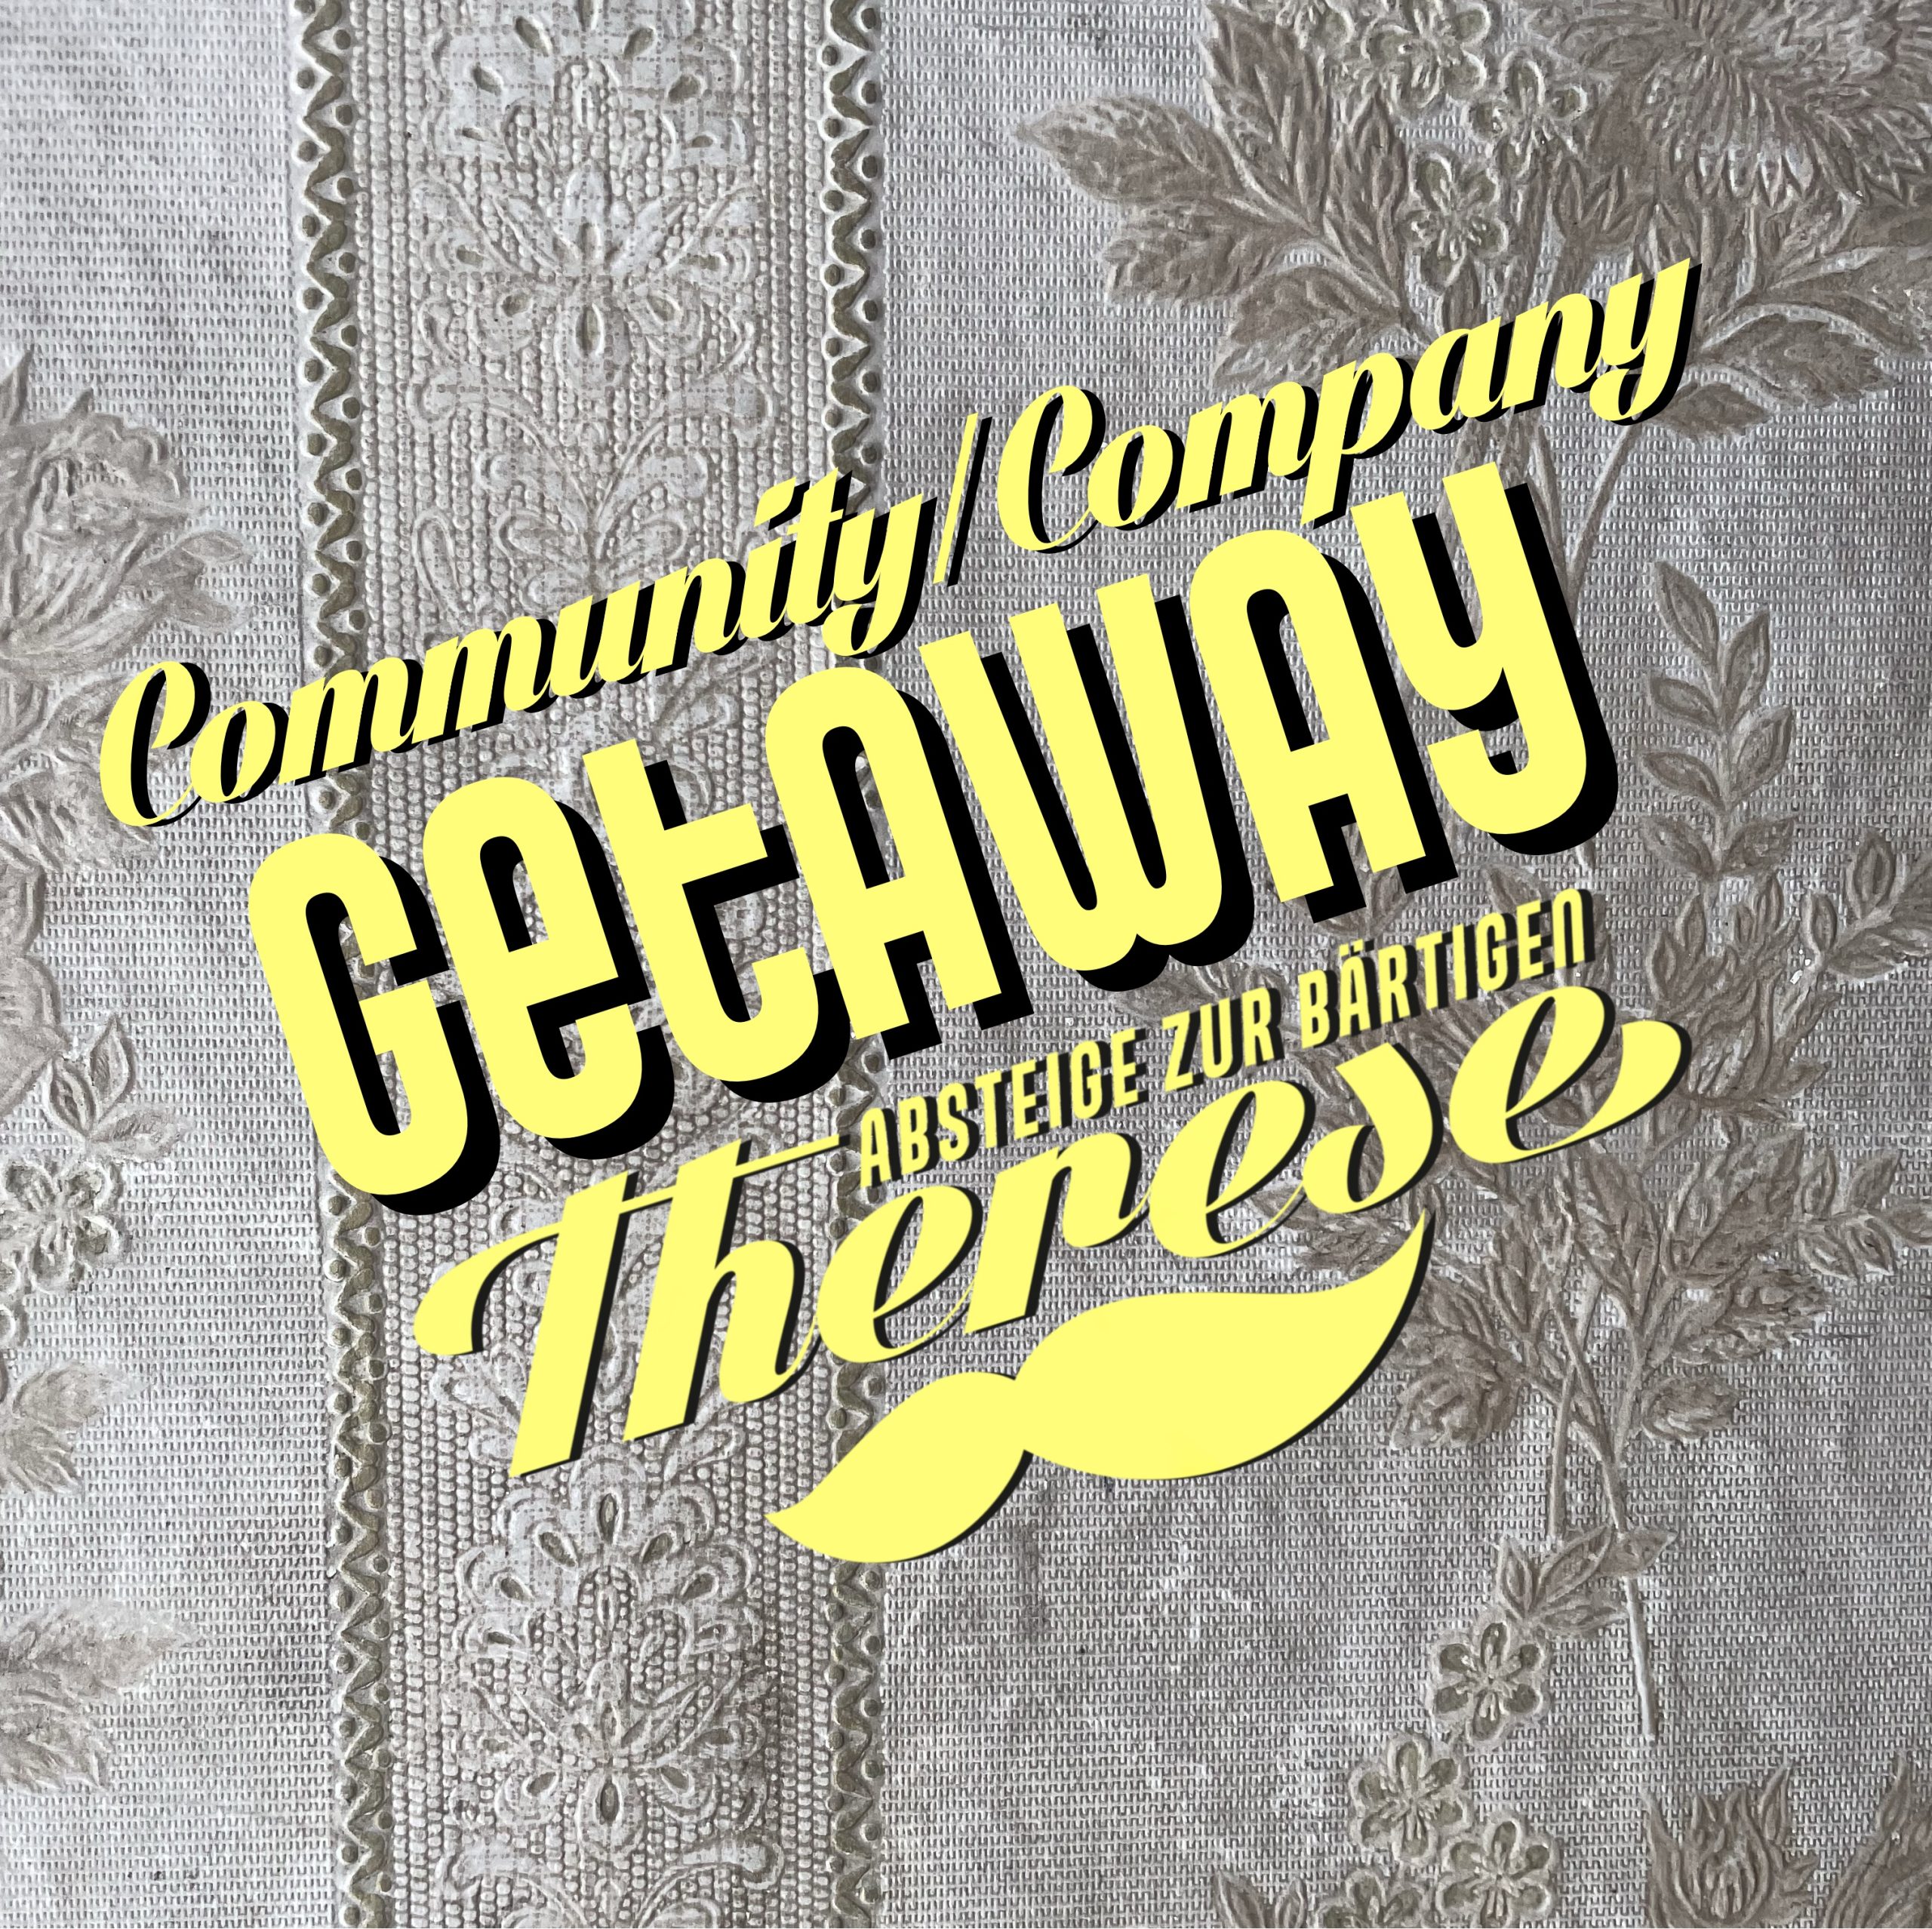 Community Getaway / Company Getaway IV